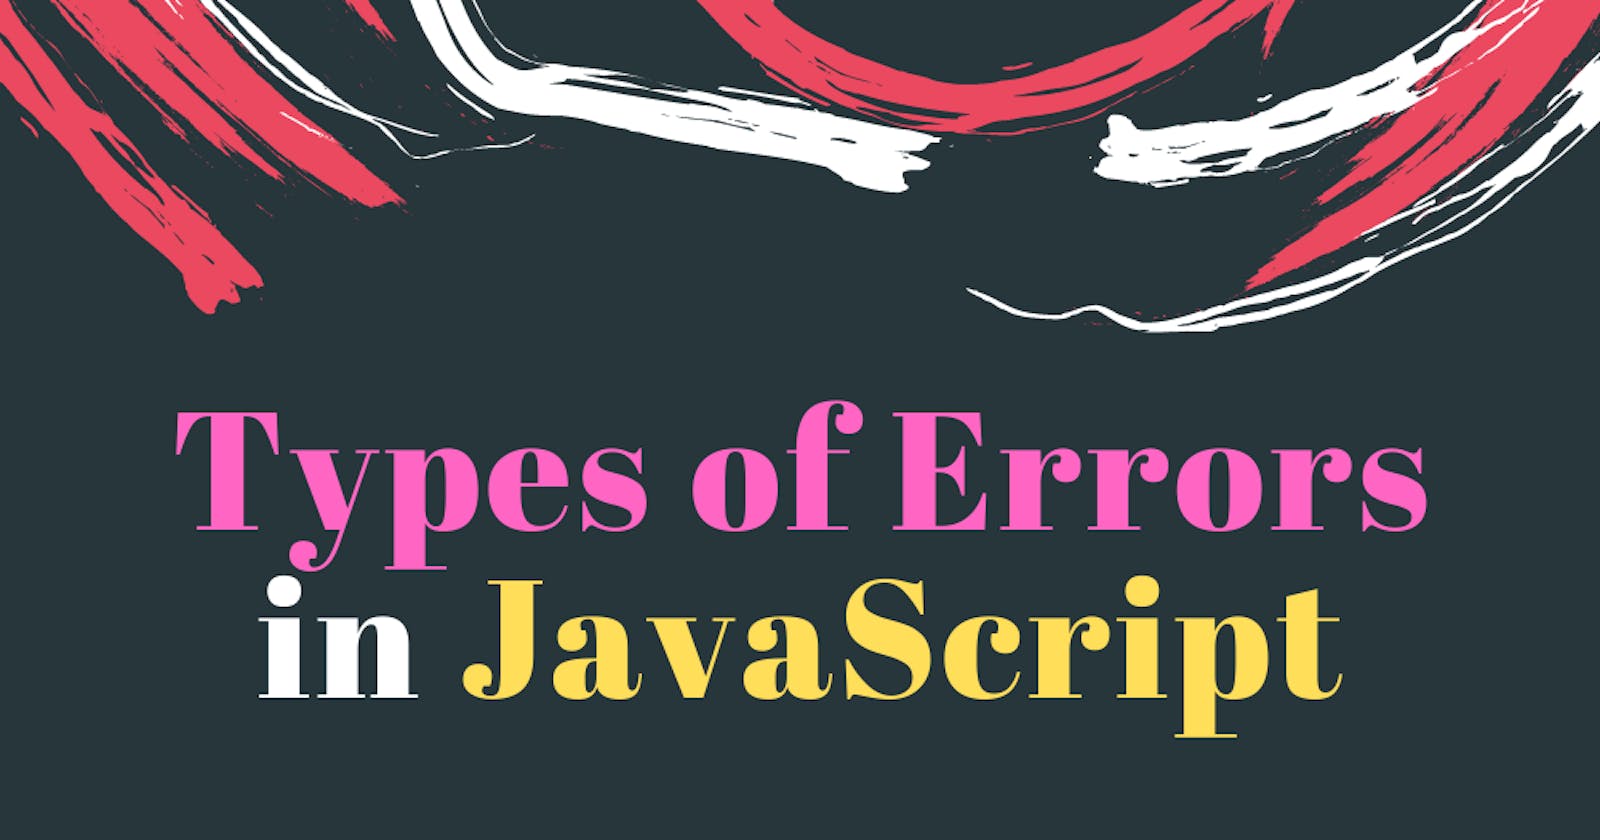 Types of Errors in JavaScript